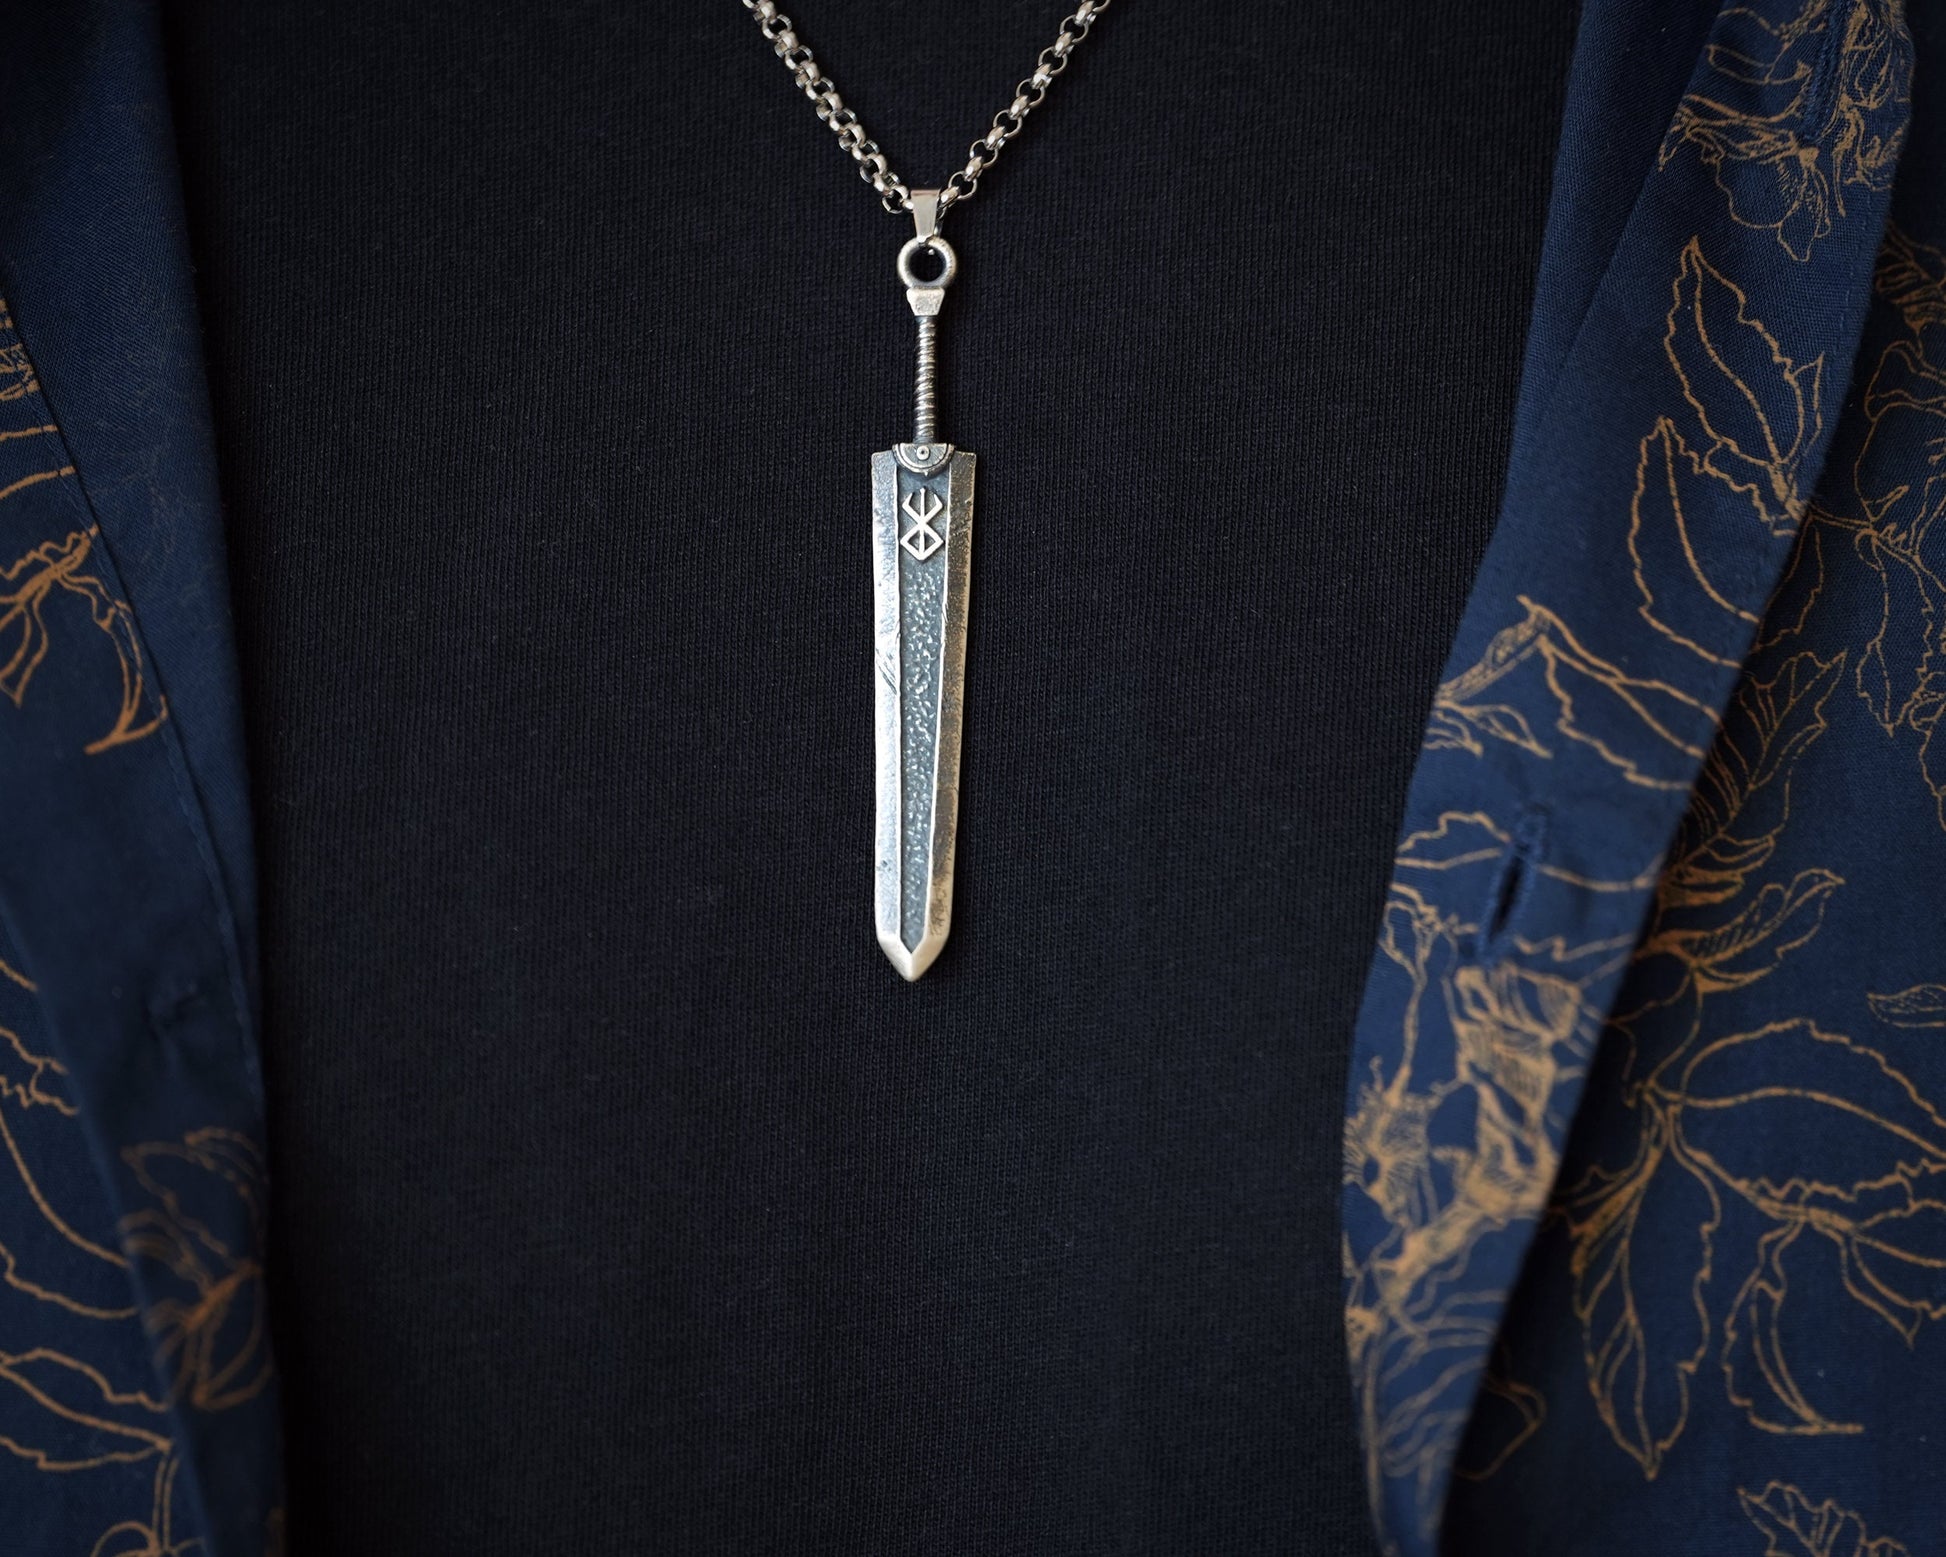 Brand of Sacrifice Dragon Slayer Sword Black Rune Anime Necklace Pendant Jewelry Fantasy Cosplay Gift for Men Women - Baldur Jewelry